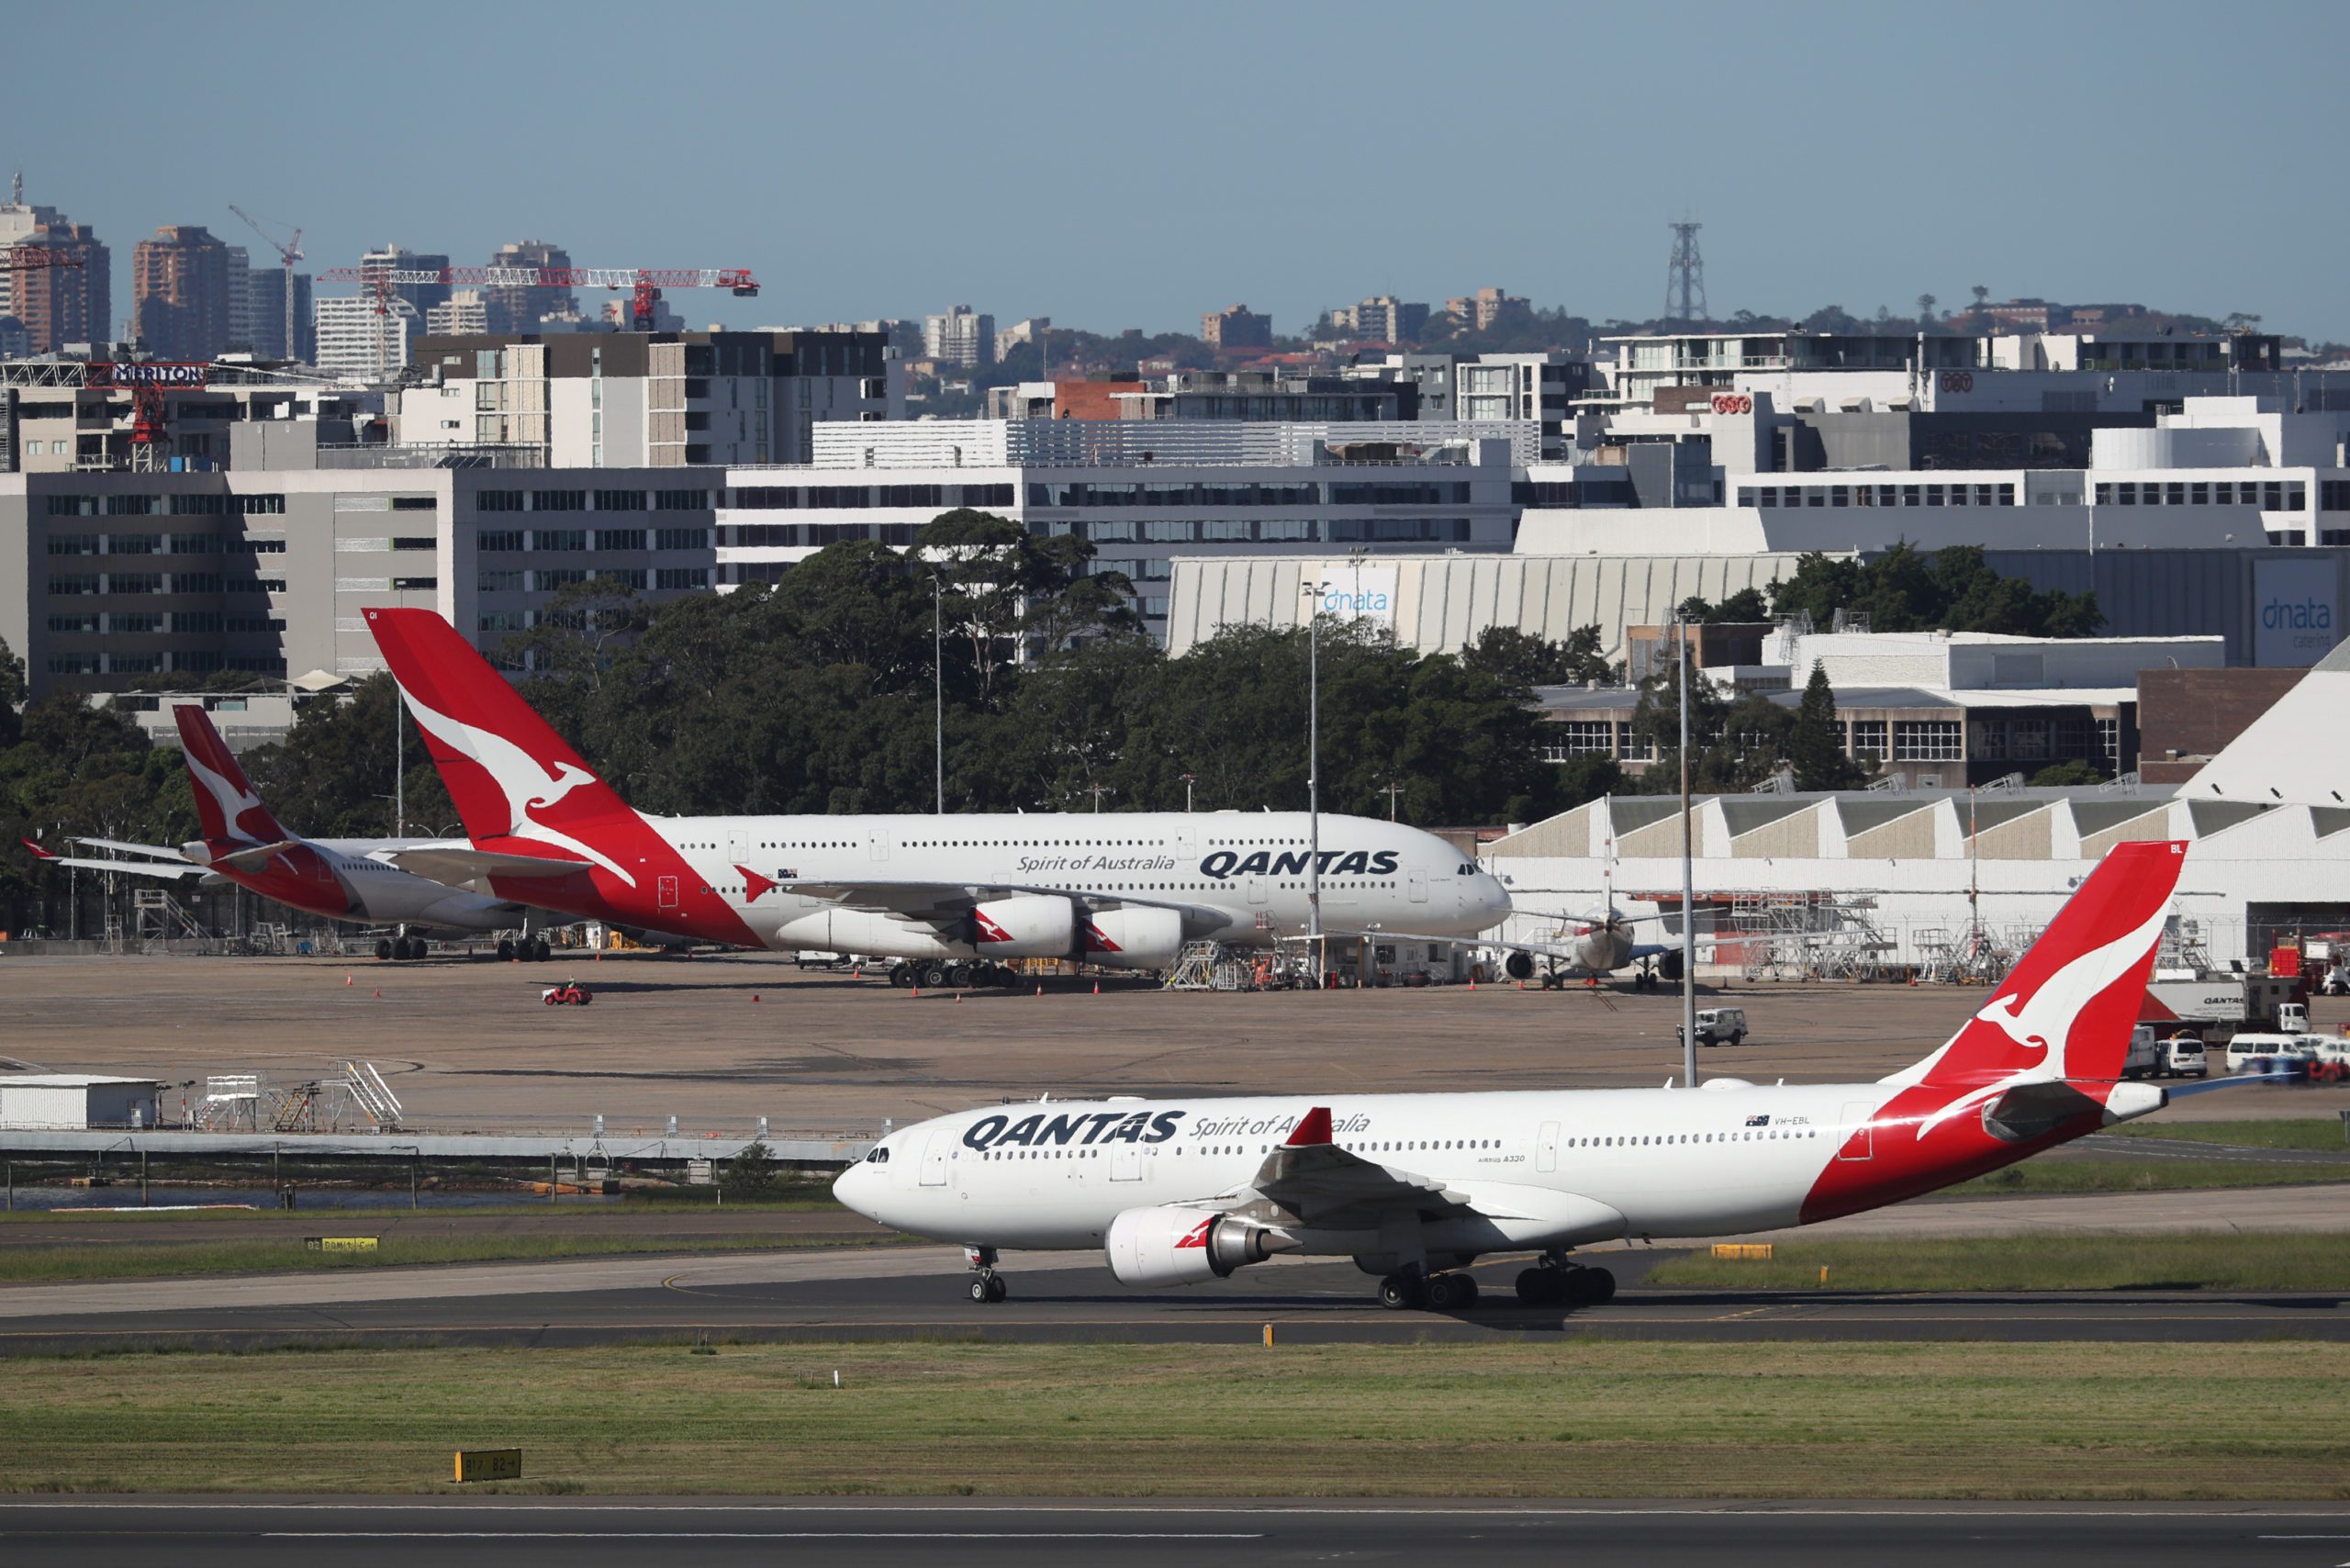 Australia's Qantas to acquire majority stake in TripADeal as leisure travel rebounds